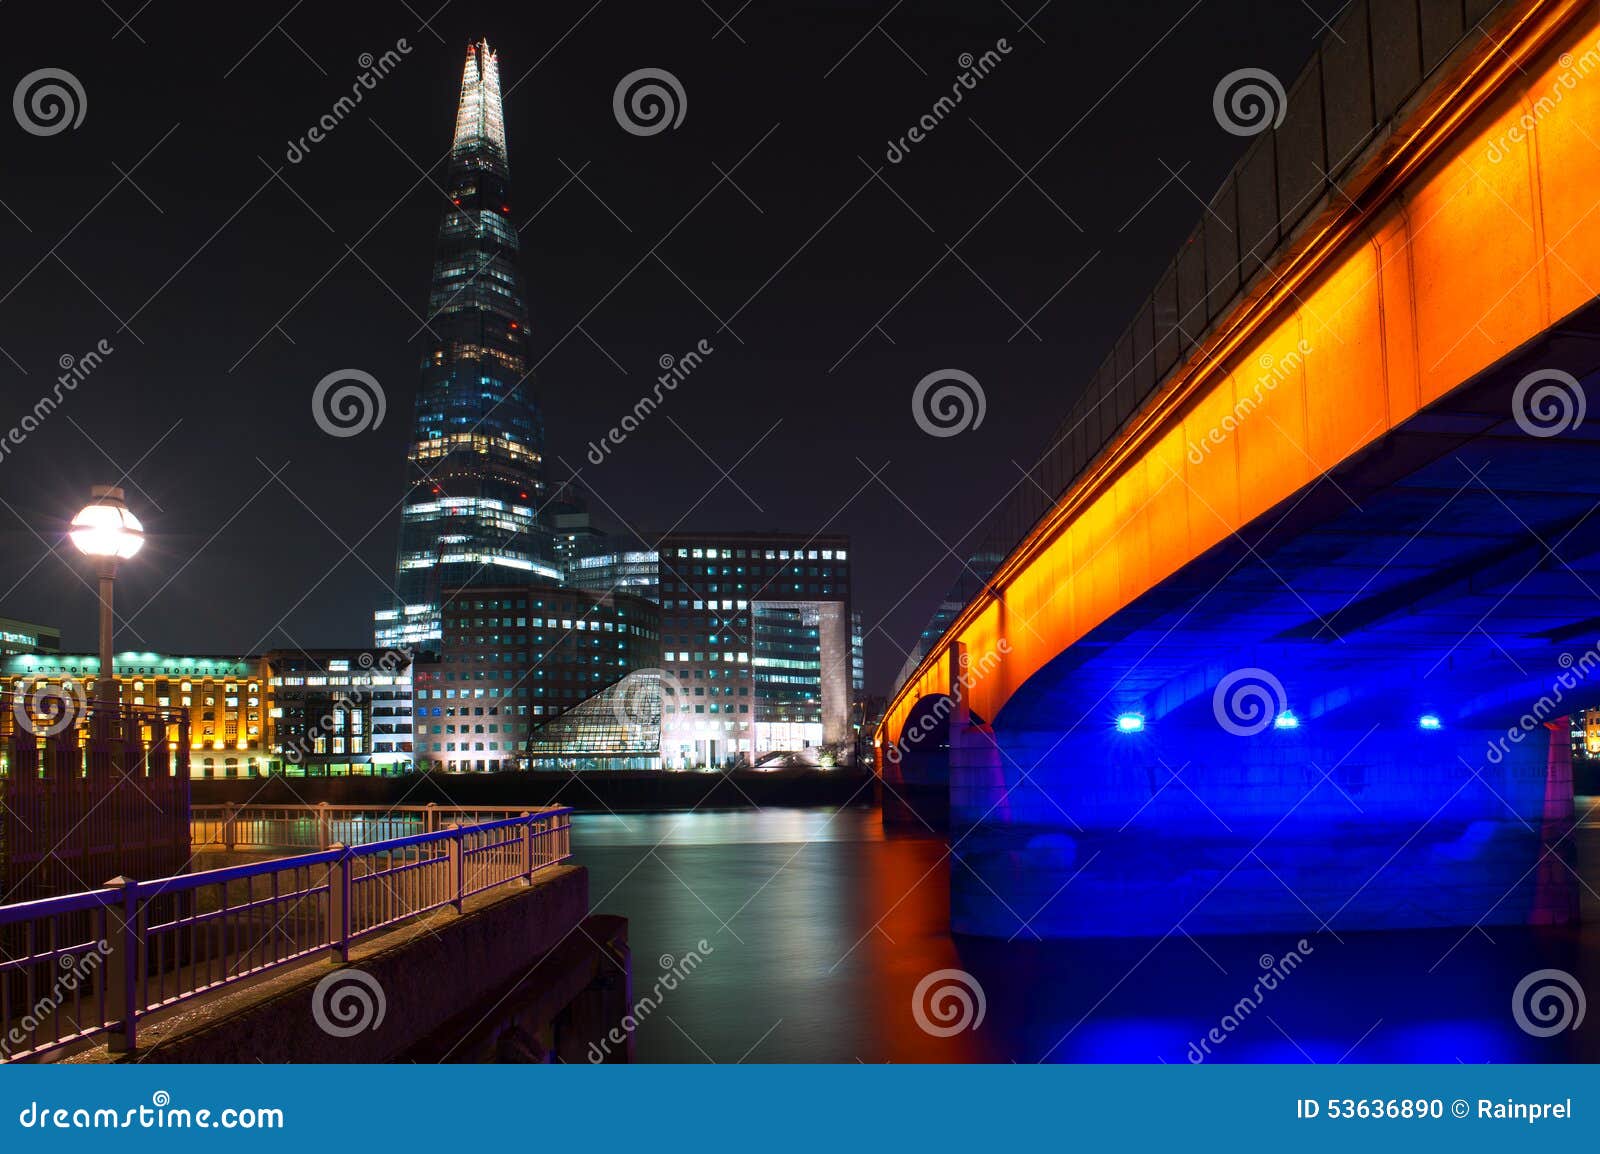 the shard and london bridge in london, england